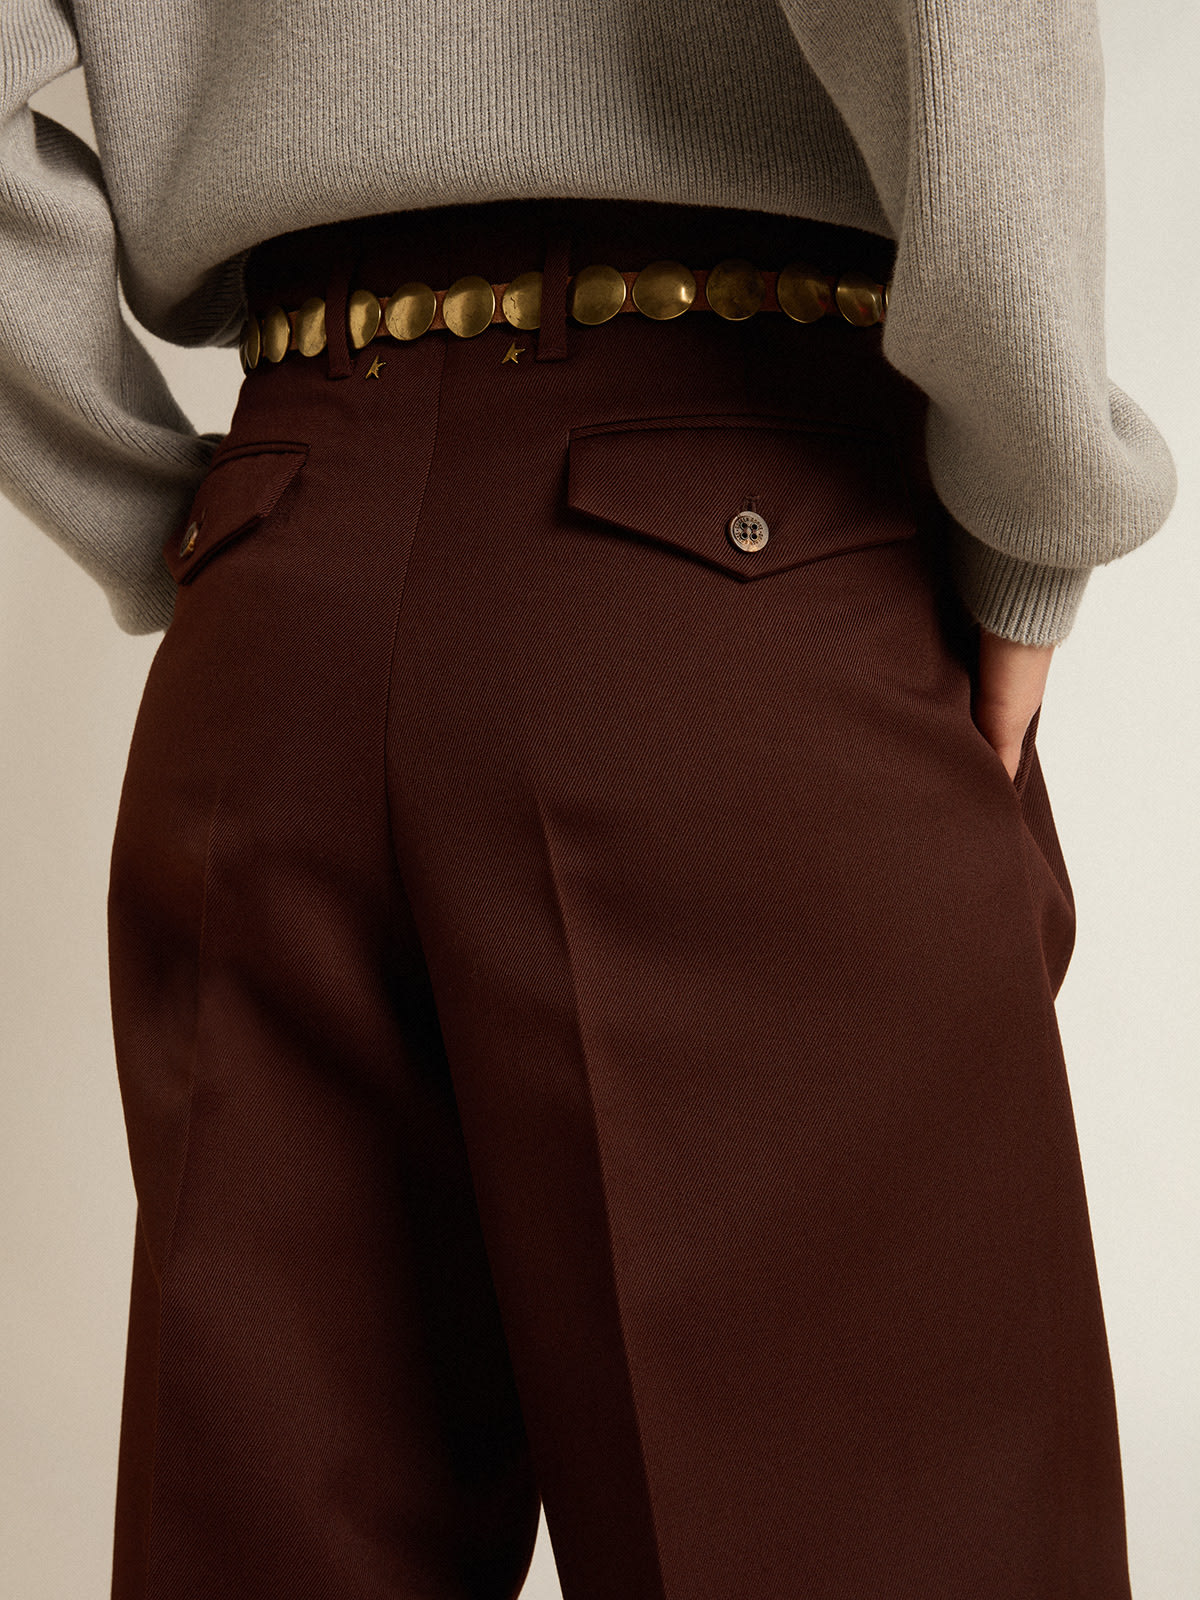 Golden Goose - Women's pants in coffee-colored wool gabardine in 